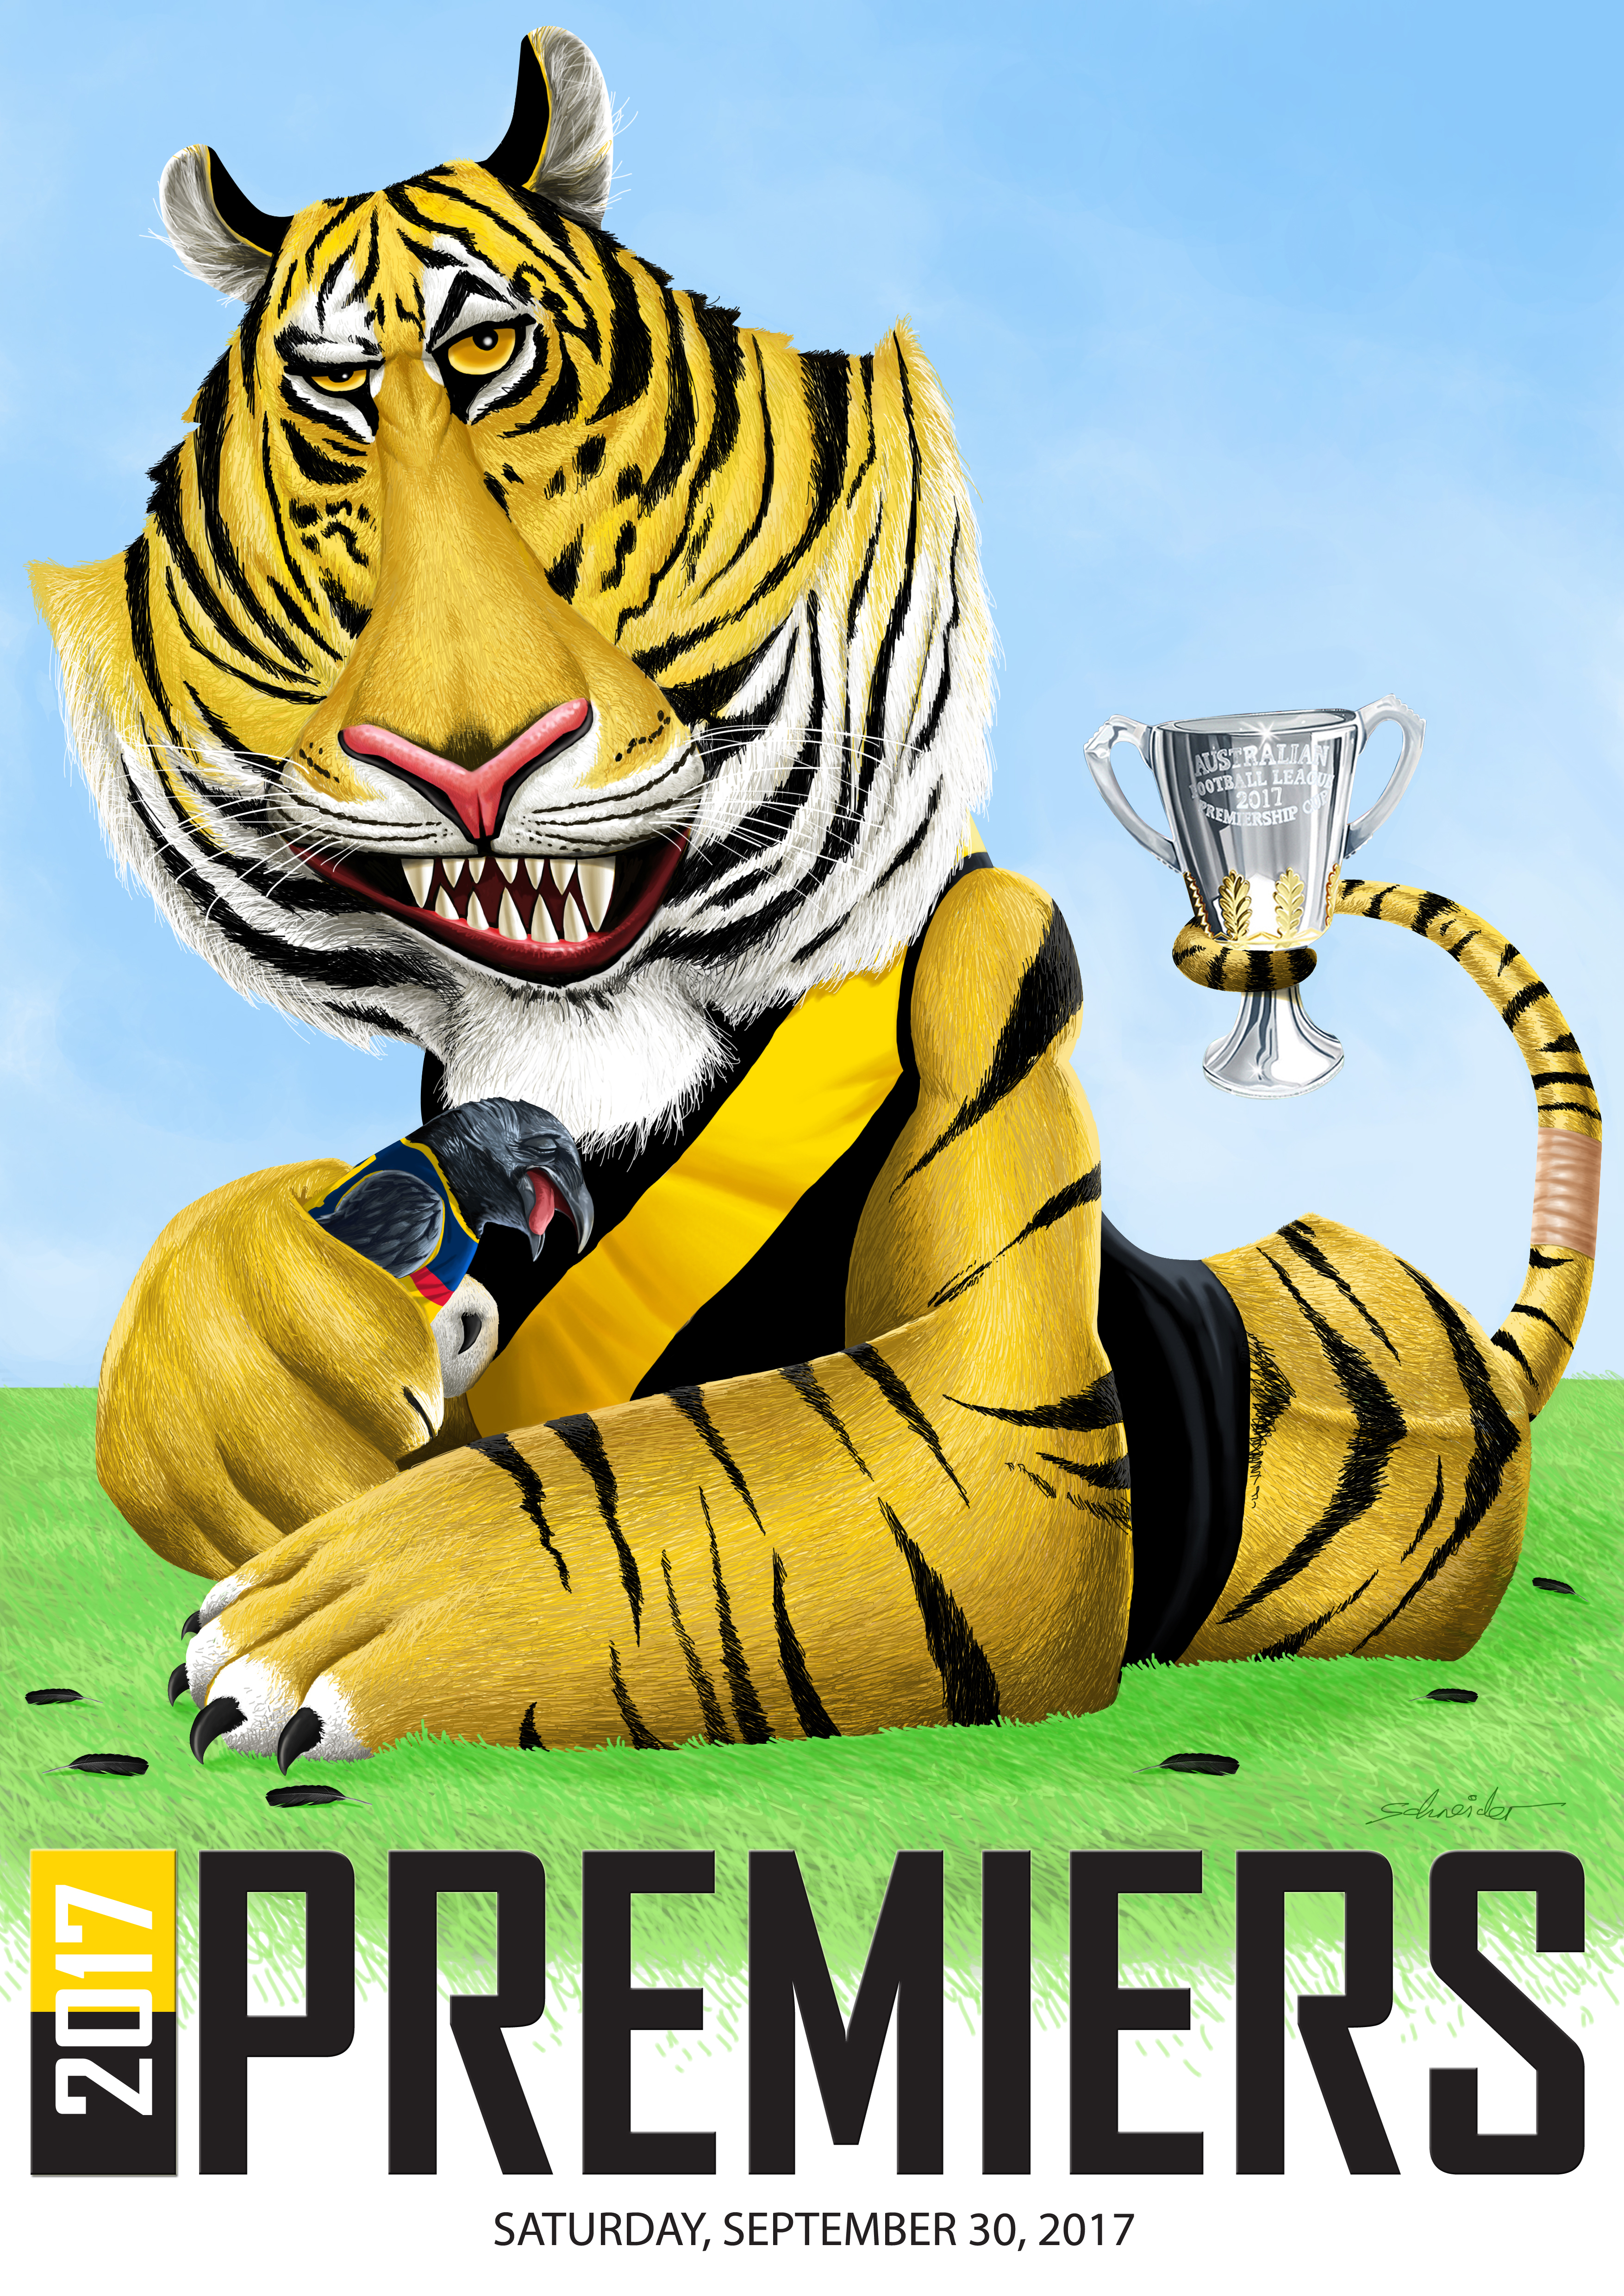 Richmond Tigers 2017 Premiers!